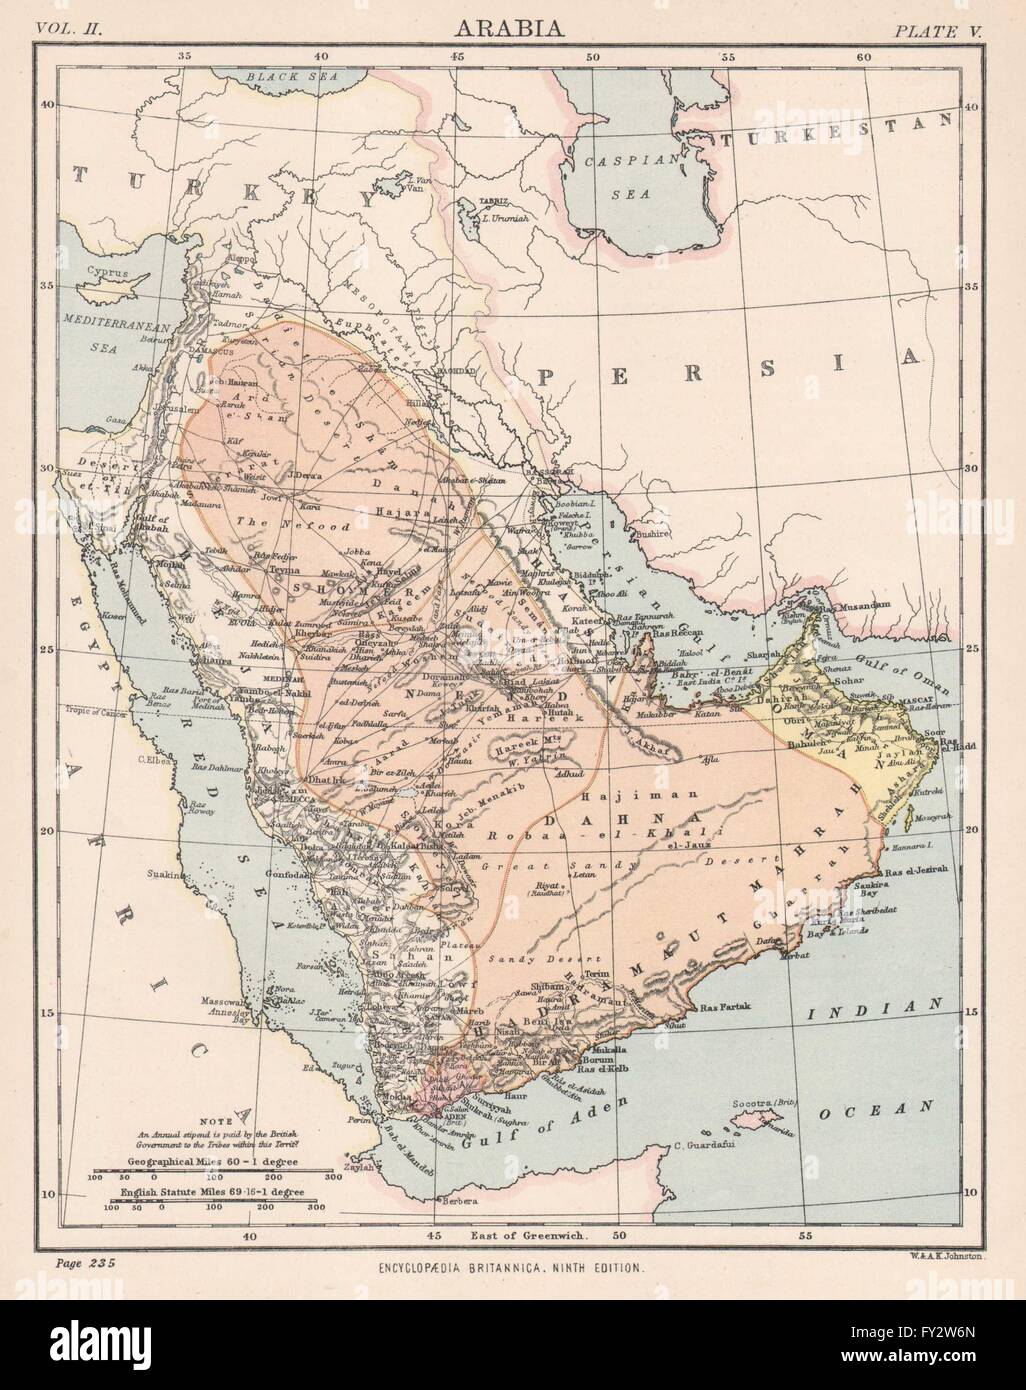 Saoudite : Arabie saoudite Oman Aden Yémen ÉMIRATS ARABES UNIS La Mecque Medina, 1898 carte antique Banque D'Images